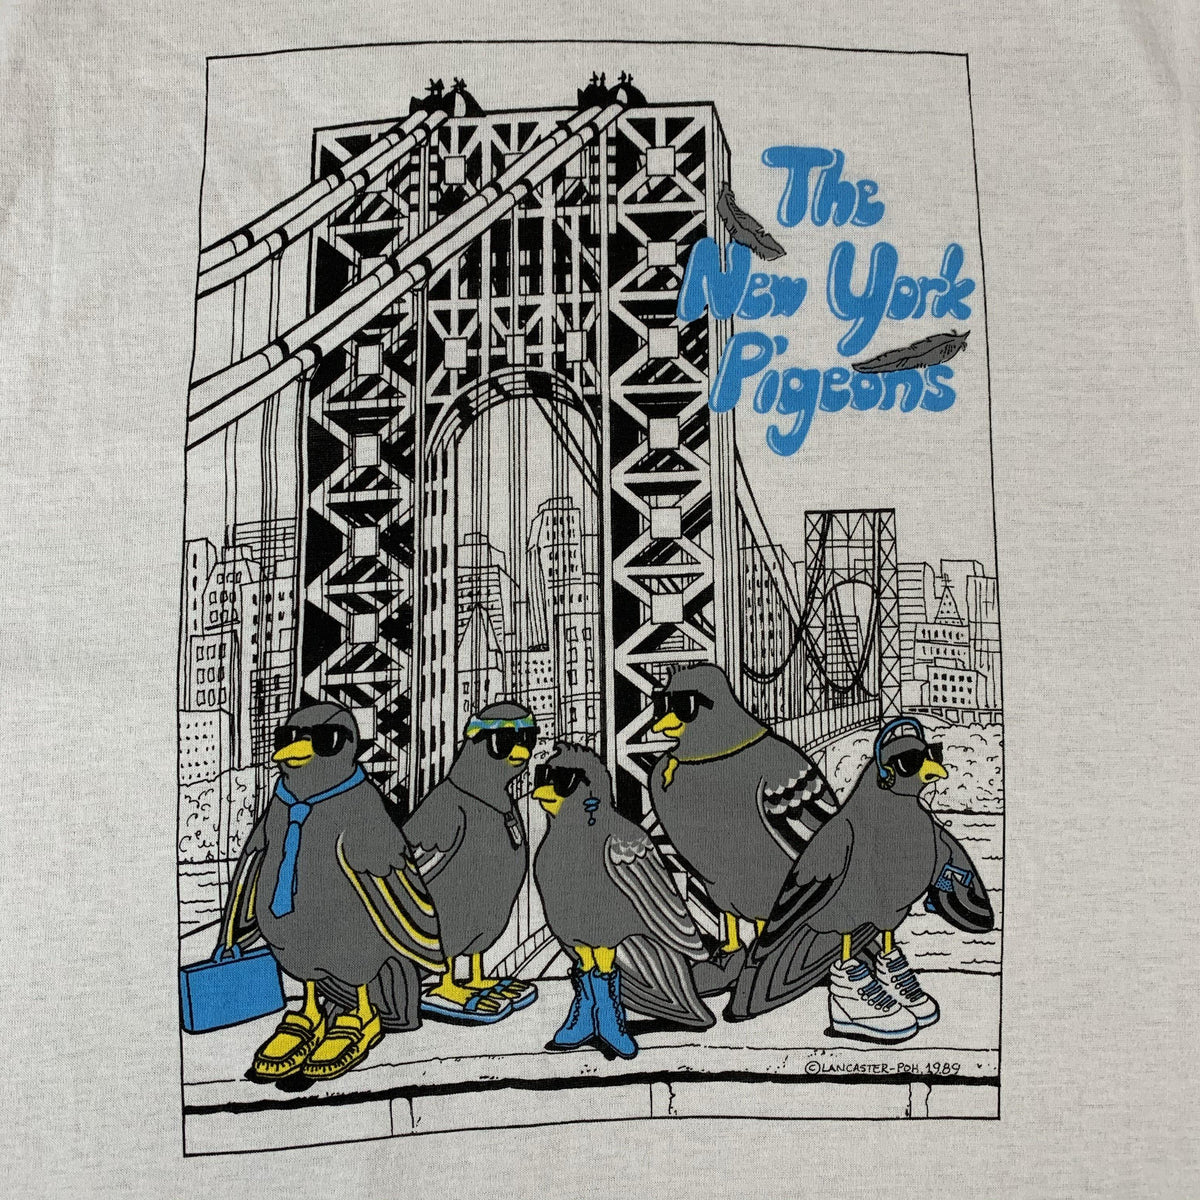 Vintage The New York Pigeons “NYC” T-Shirt - jointcustodydc